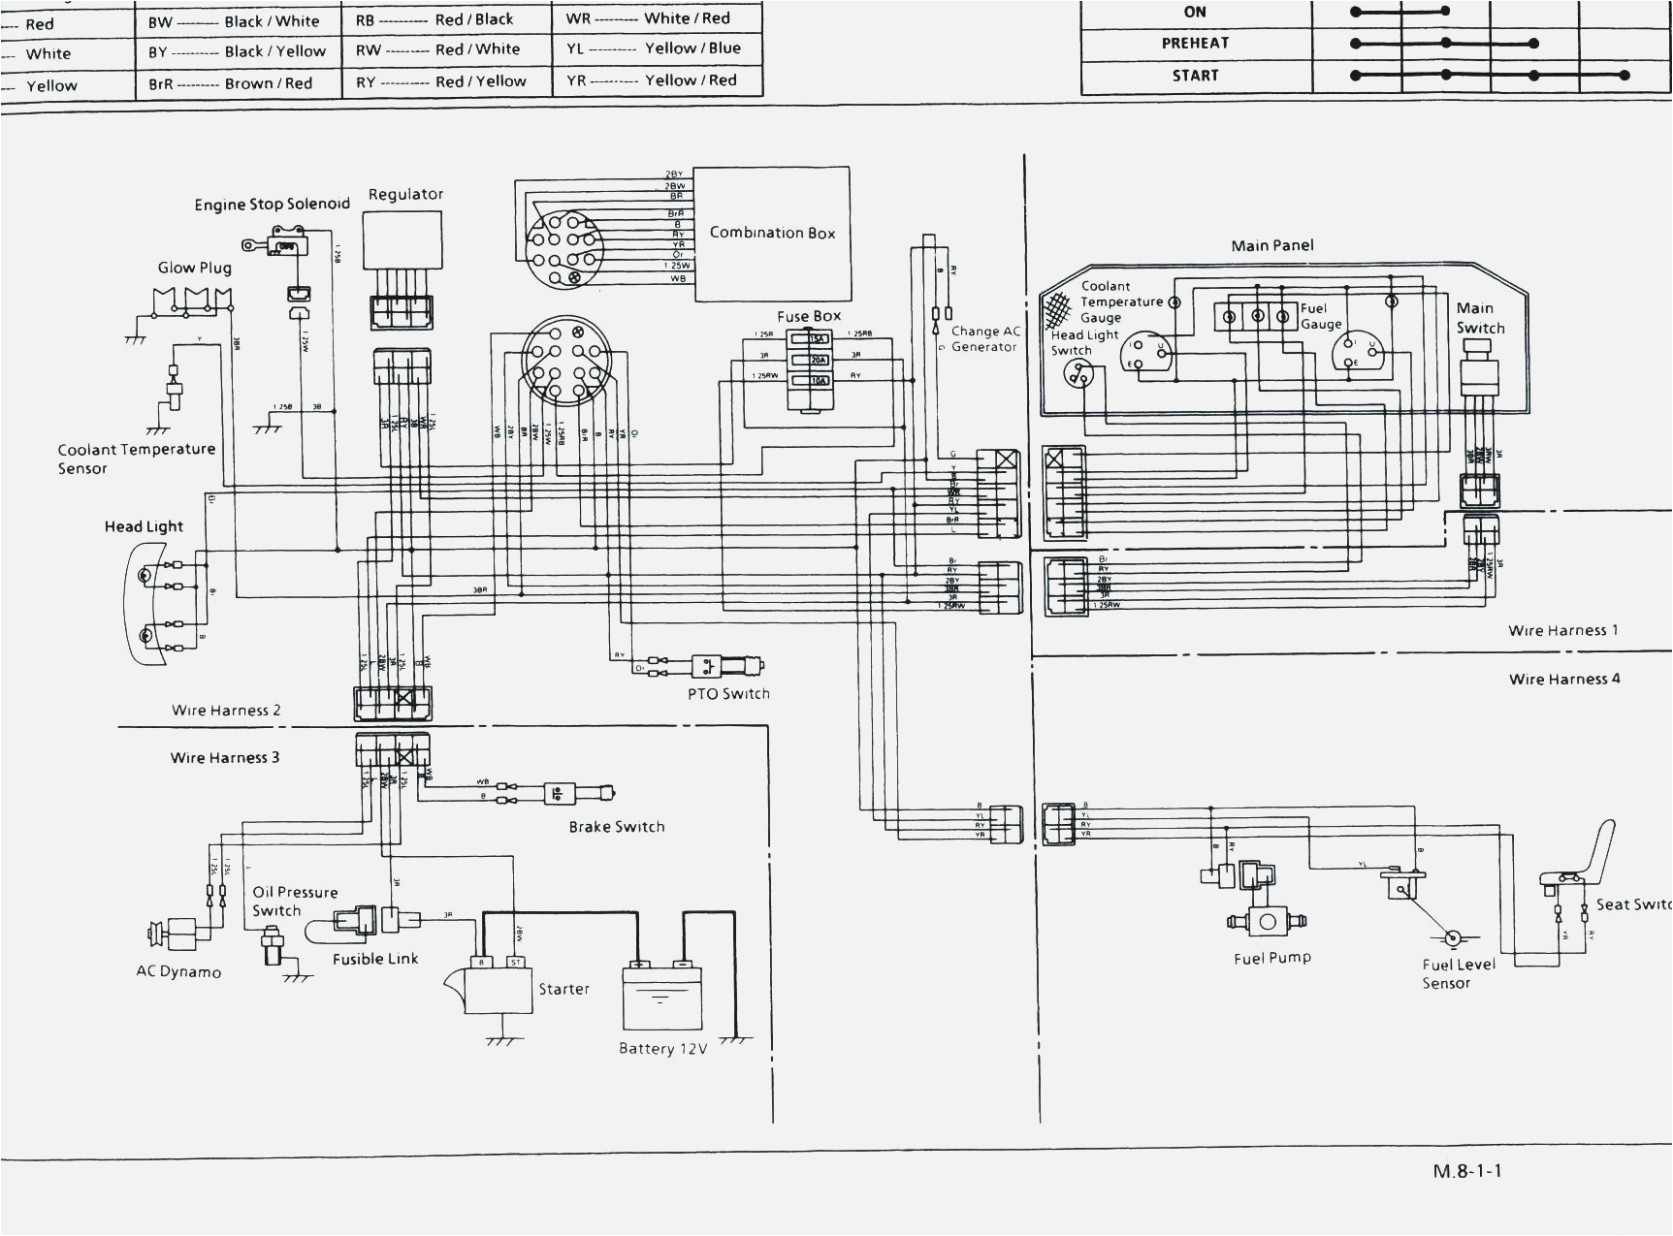 kubota mx5000su engine diagram wiring diagram val kubota mx5000su engine diagram wiring diagram rules kubota b7800